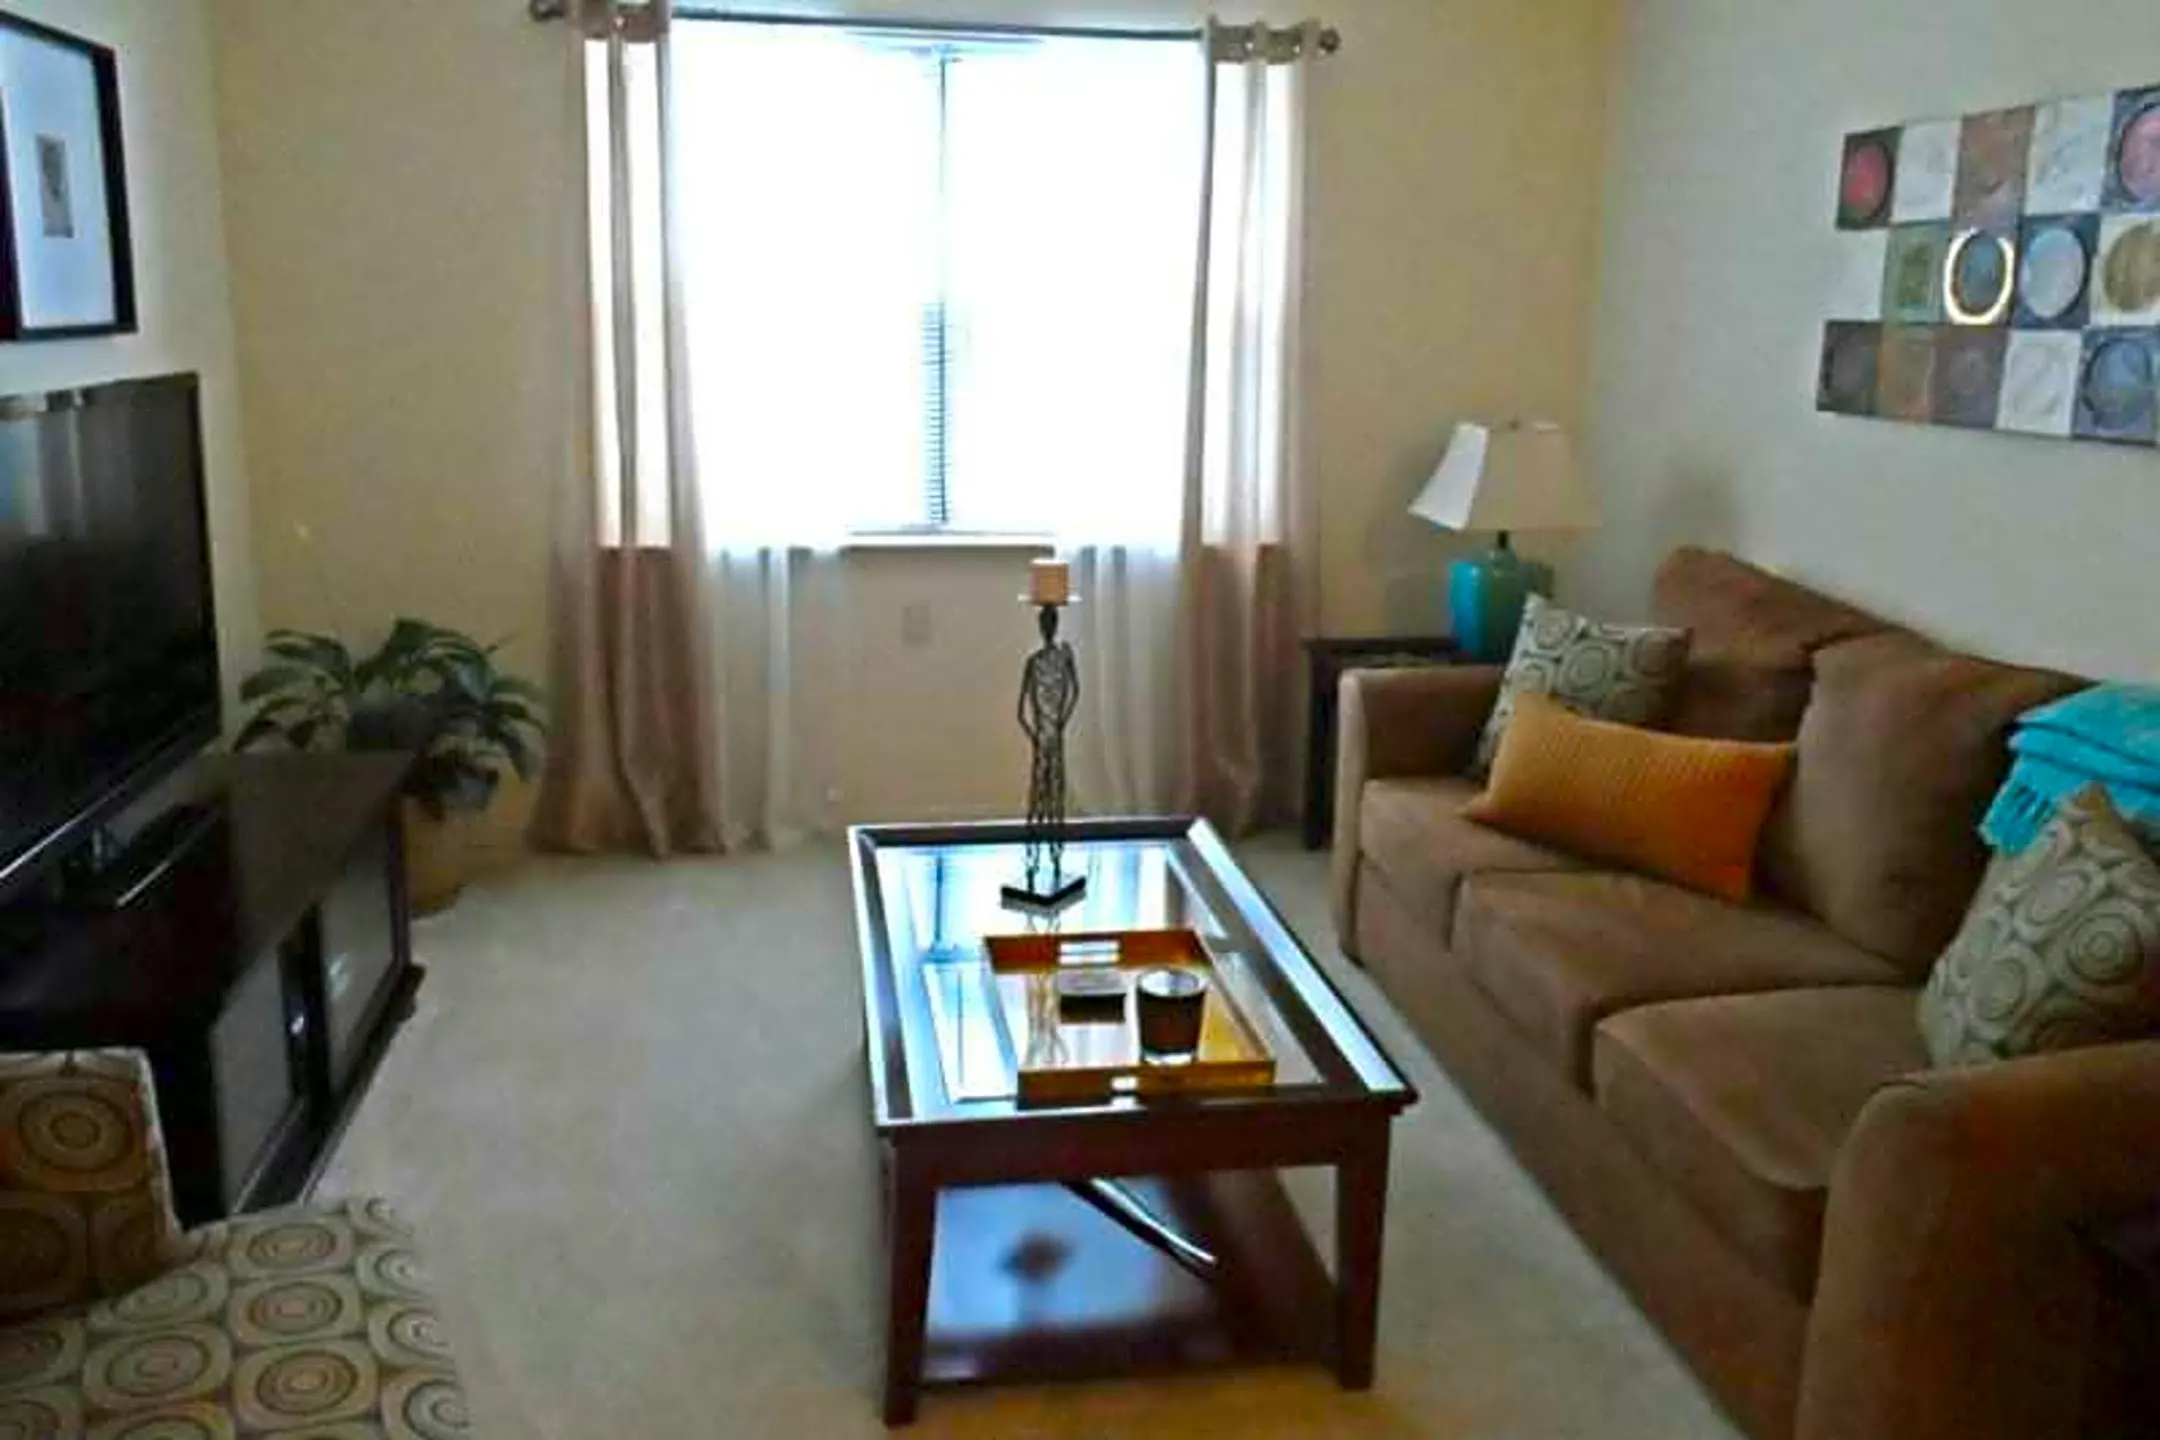 Living Room - Foxcroft Village Apartments - Martinsburg, WV